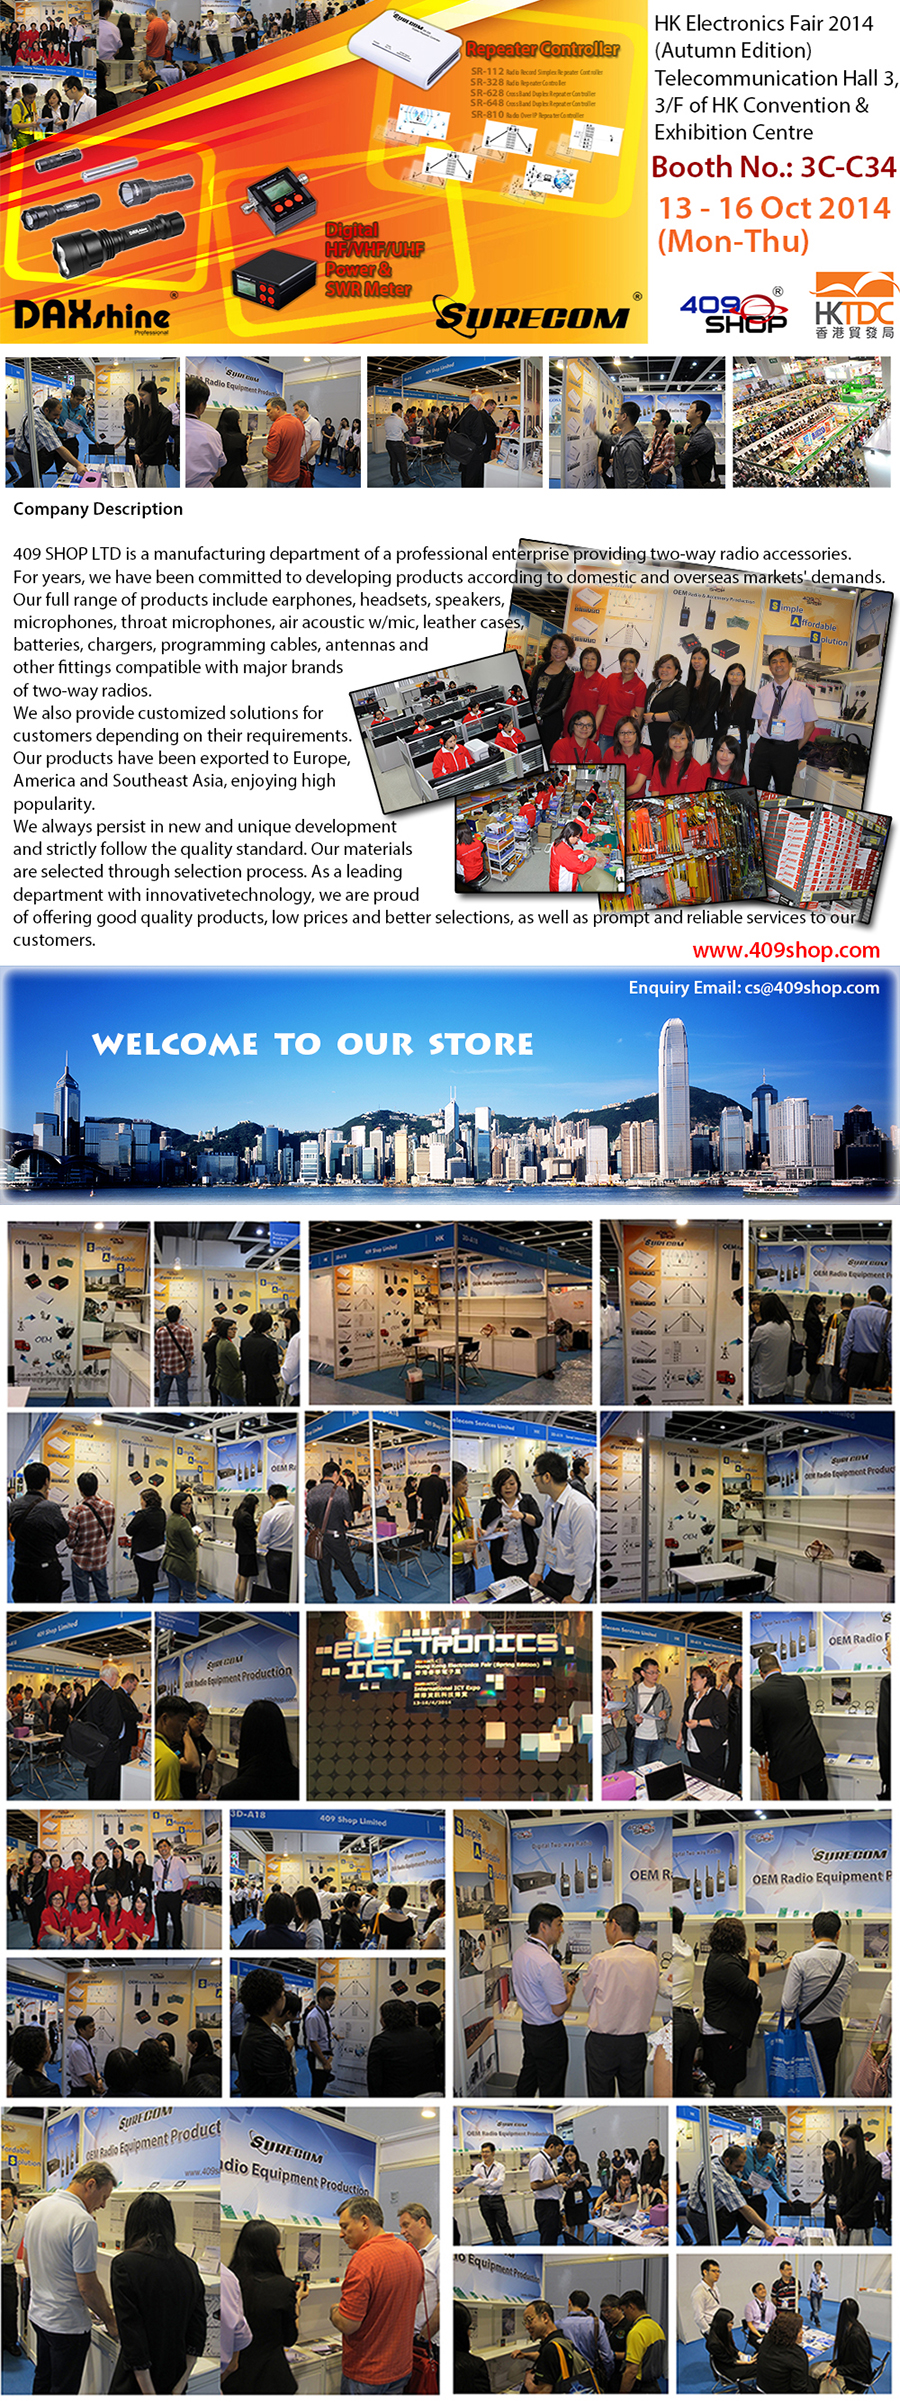 2014 HK Electronics Fair (AUTUMN EDITION) 